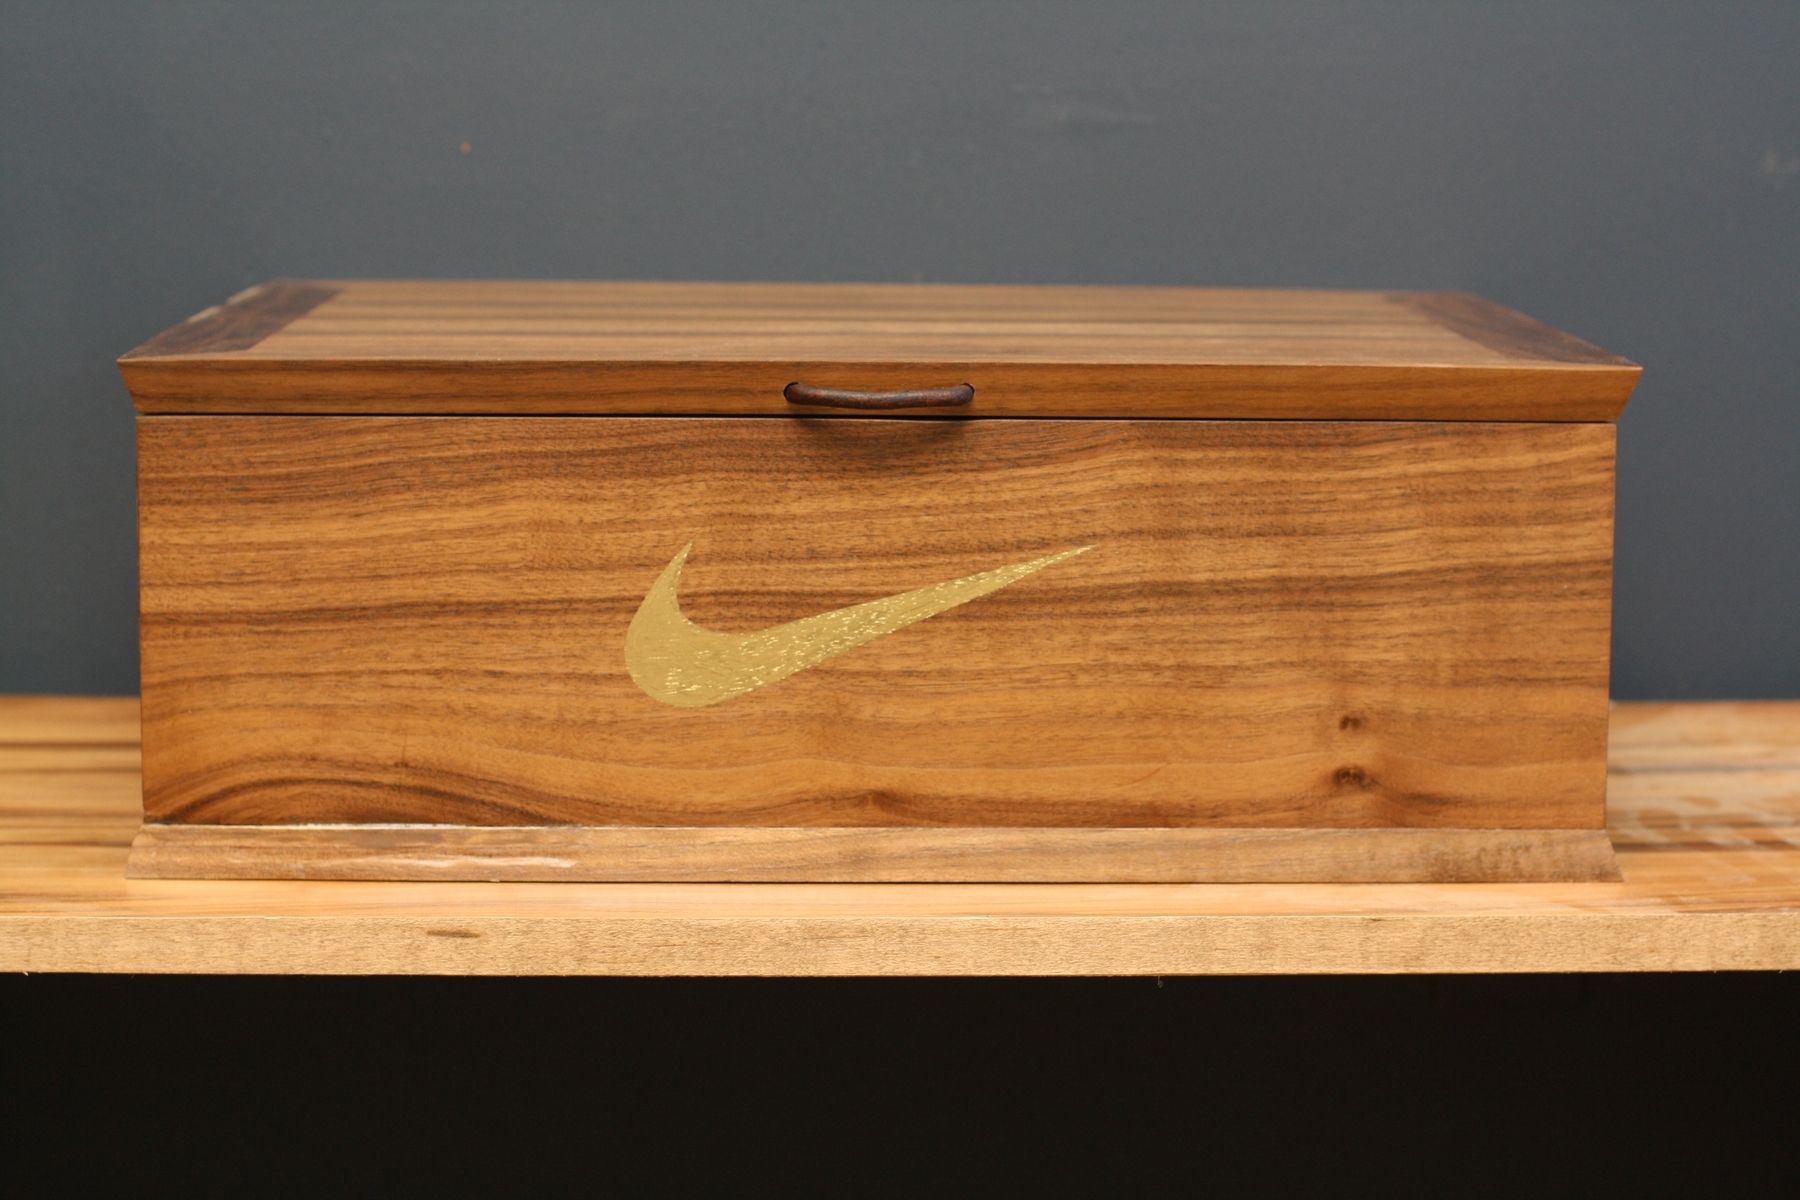 Custom Nike Sneaker Box